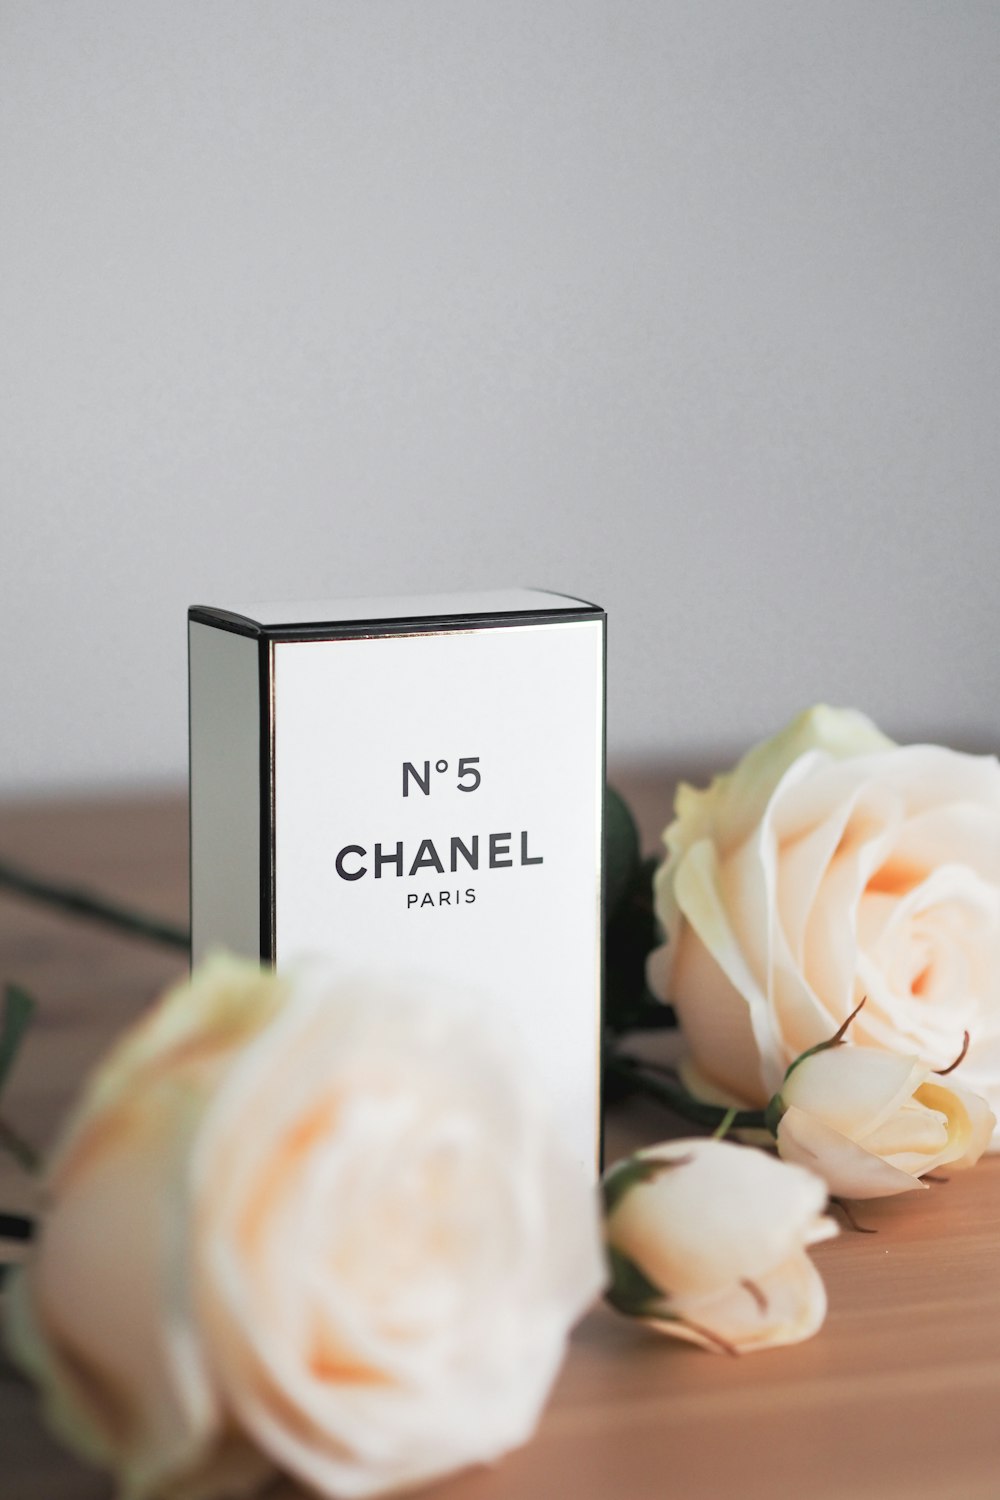 A box of chanel perfume next to flowers photo – Free Plant Image on Unsplash